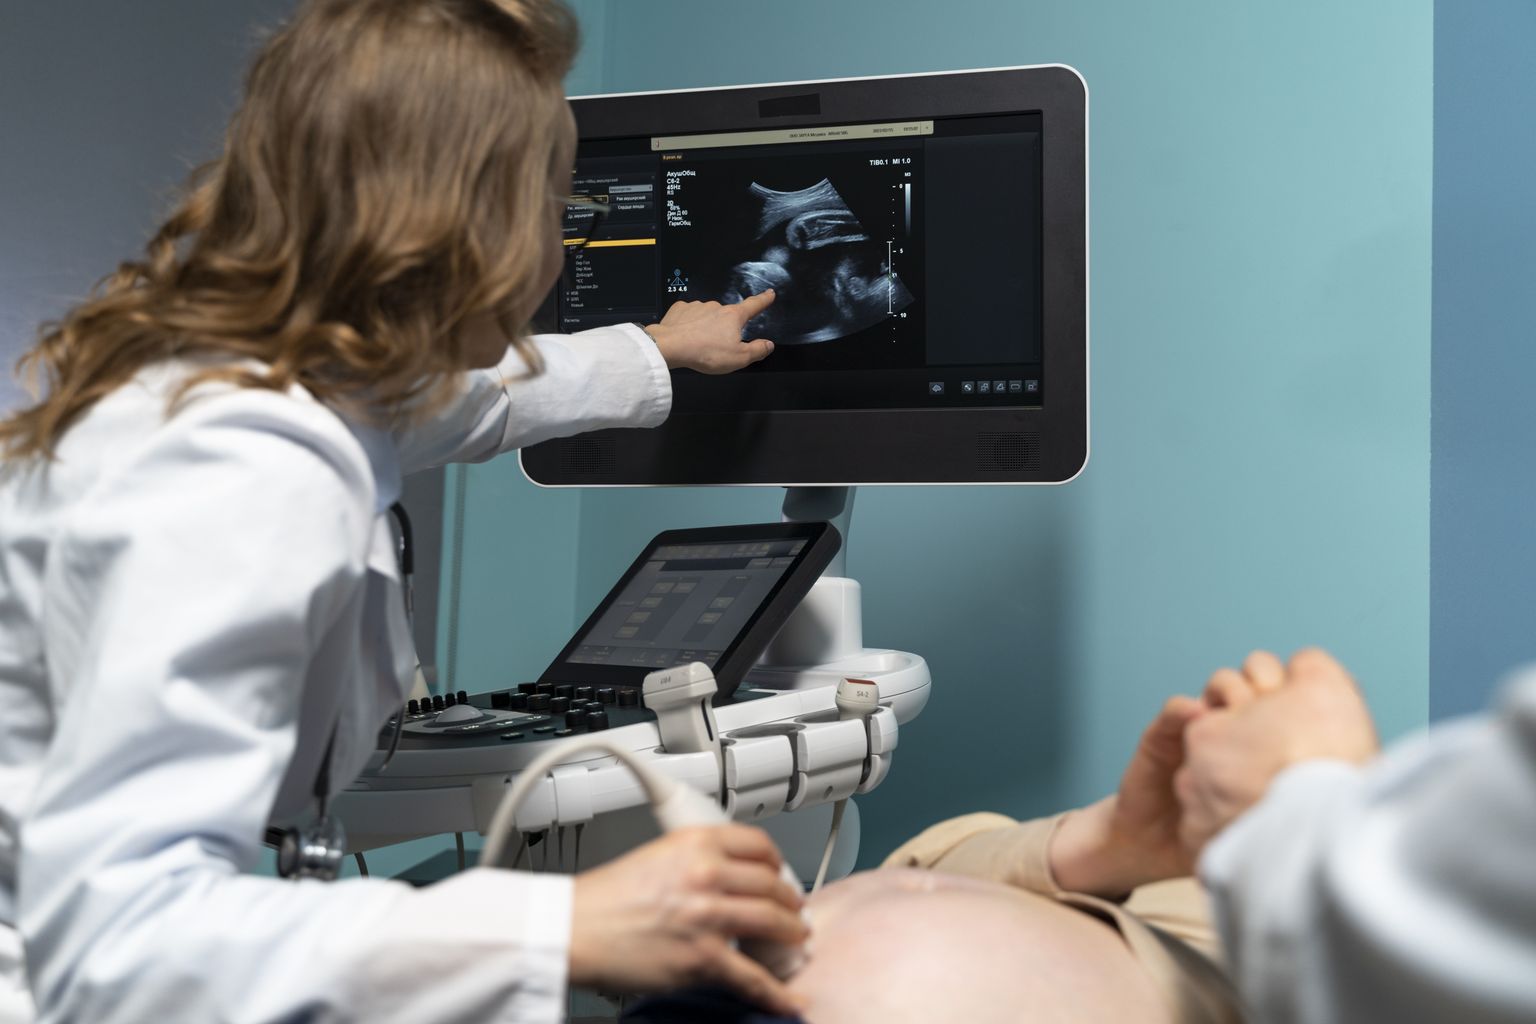 Pregled pacijenta z ultrazvokom